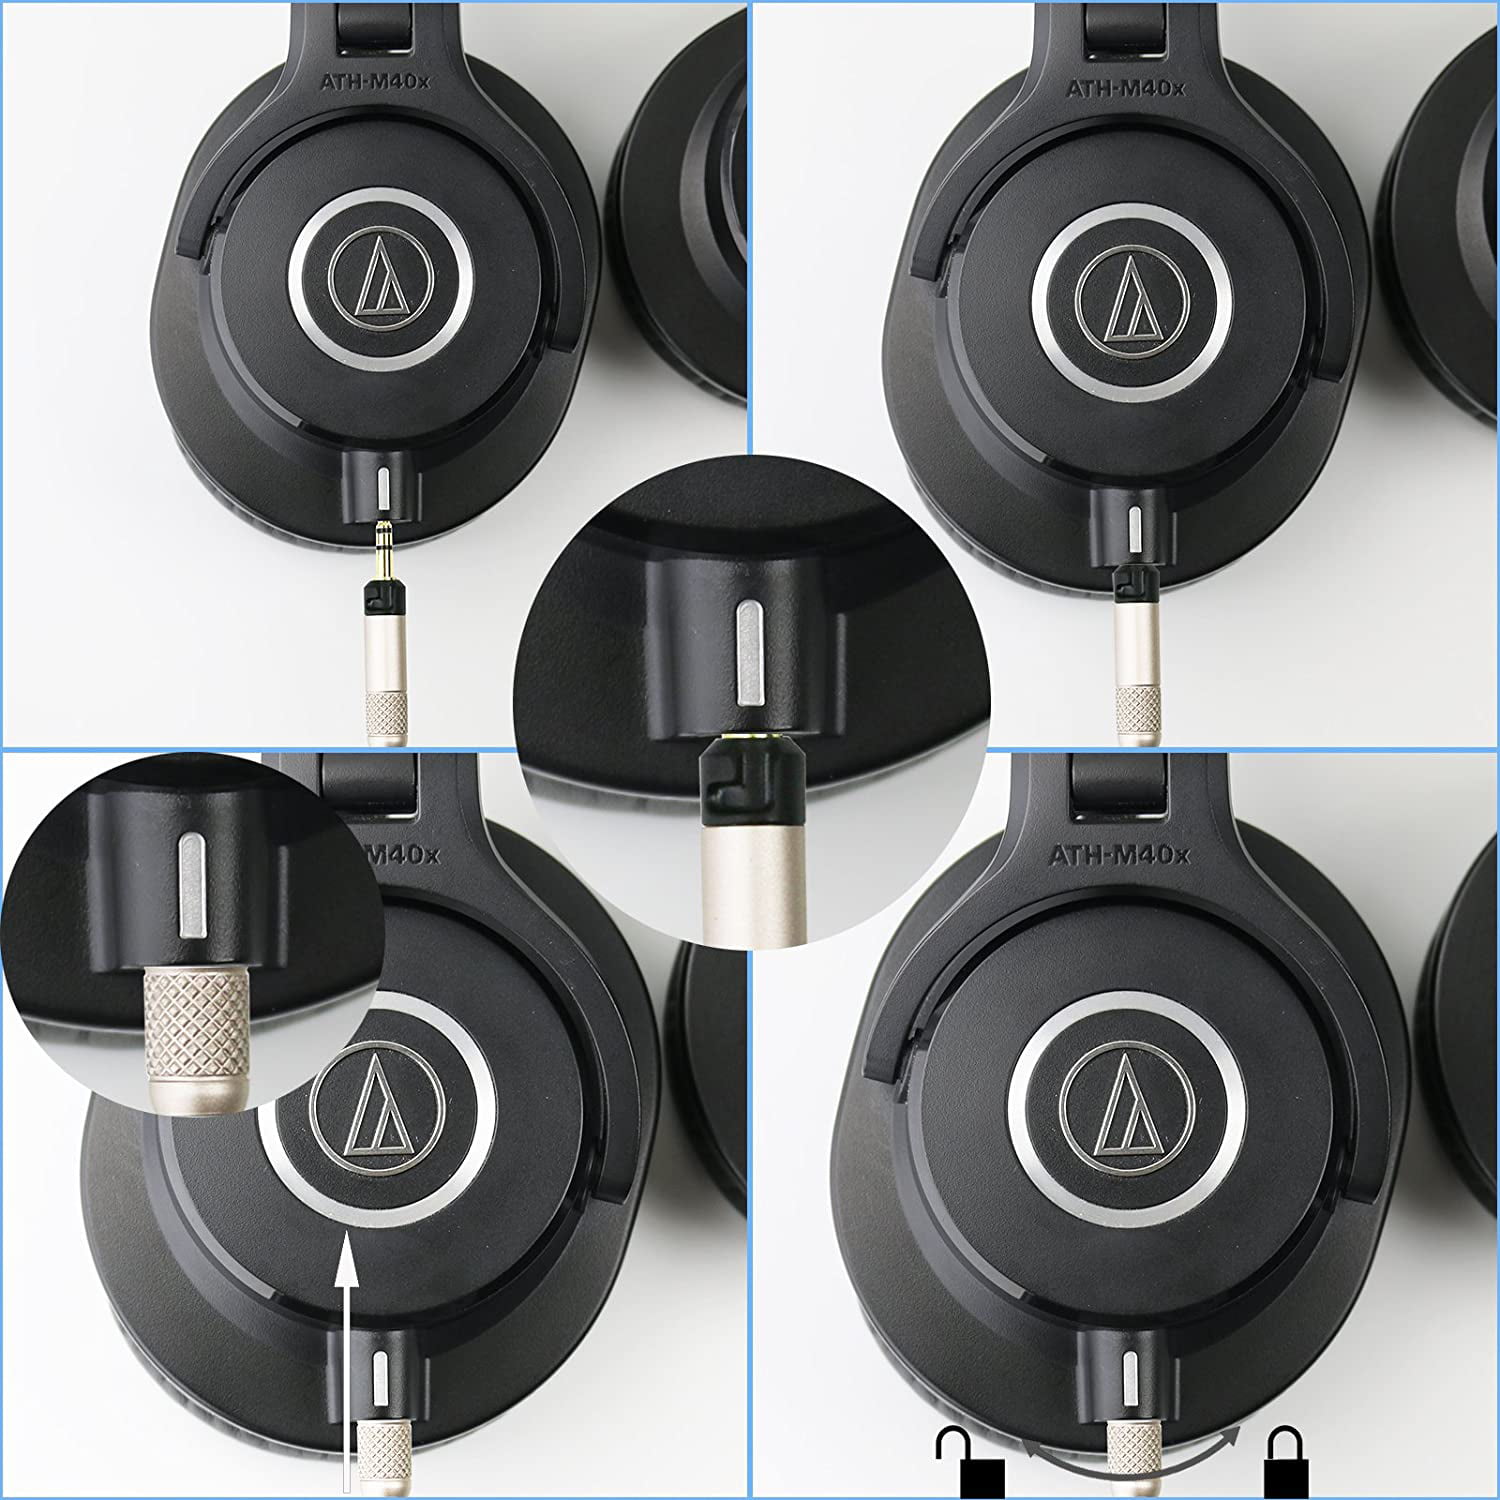 NewFantasia Cable For Audio Technica ATH-M50x ATH-M40x ATH-M70x Headphones 1.2m 